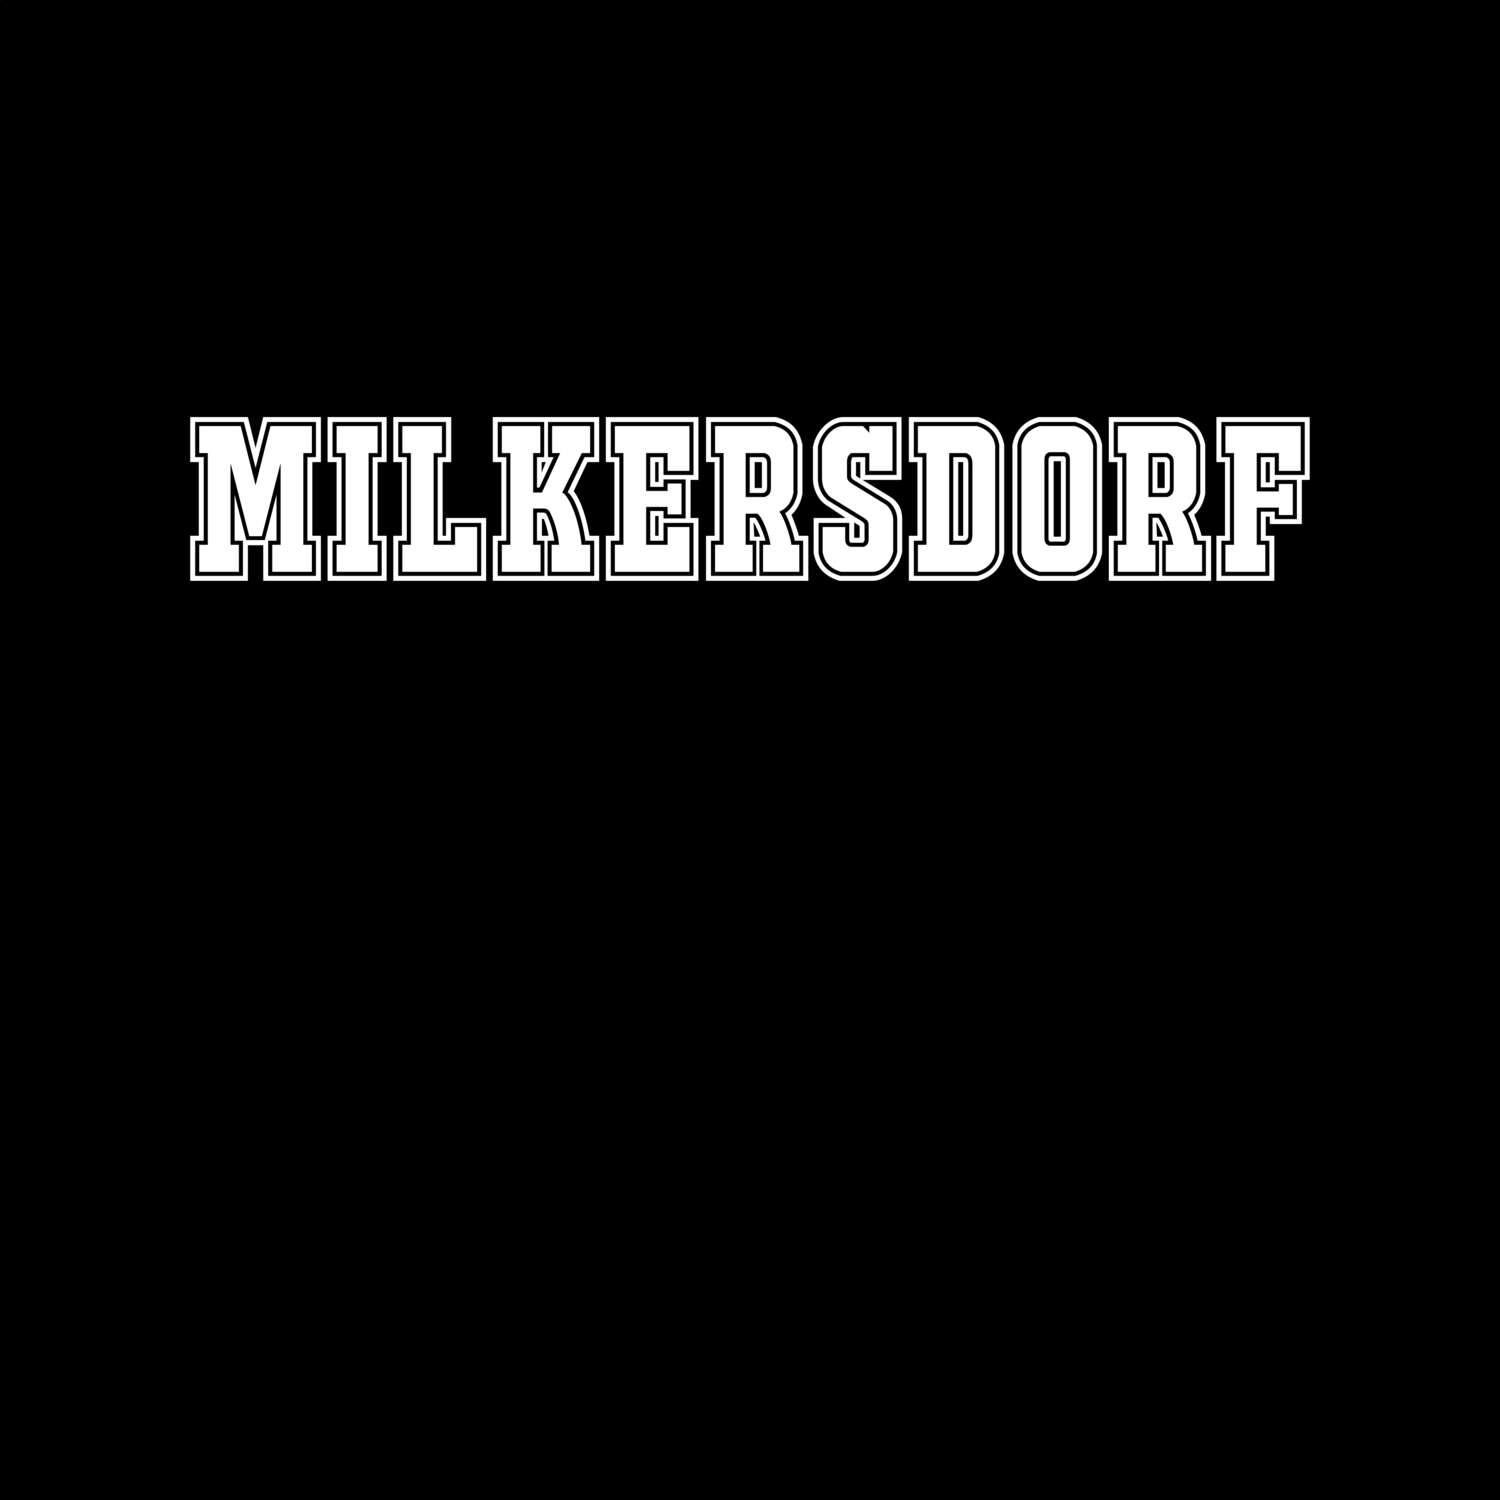 Milkersdorf T-Shirt »Classic«